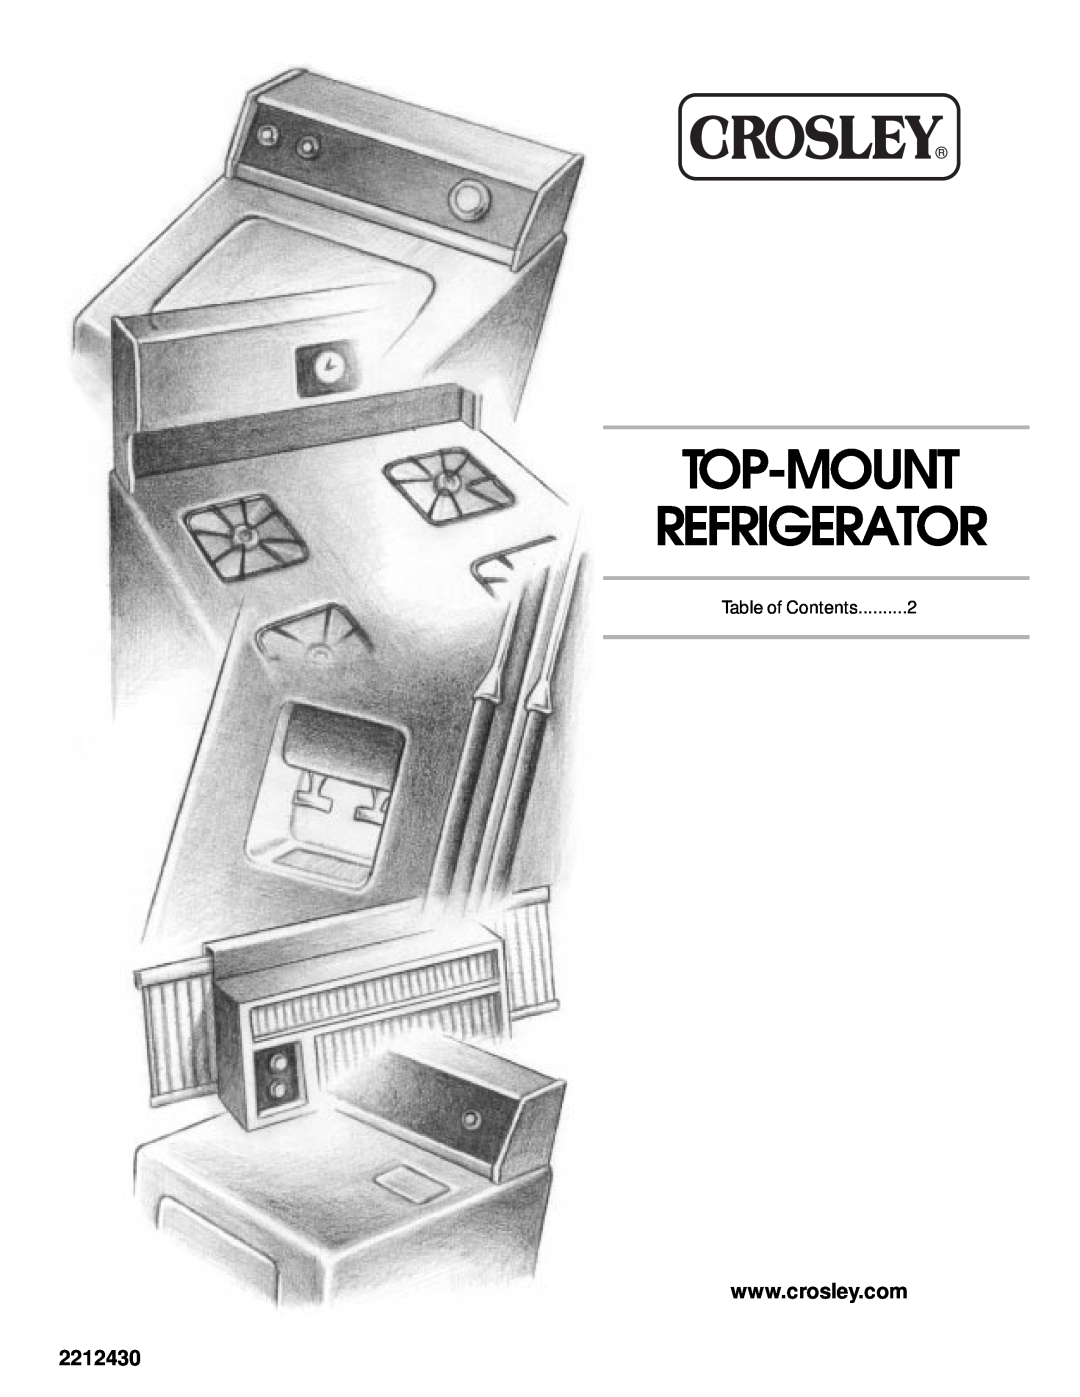 Crosley 2212430 manual Top-Mount Refrigerator, Table of Contents 